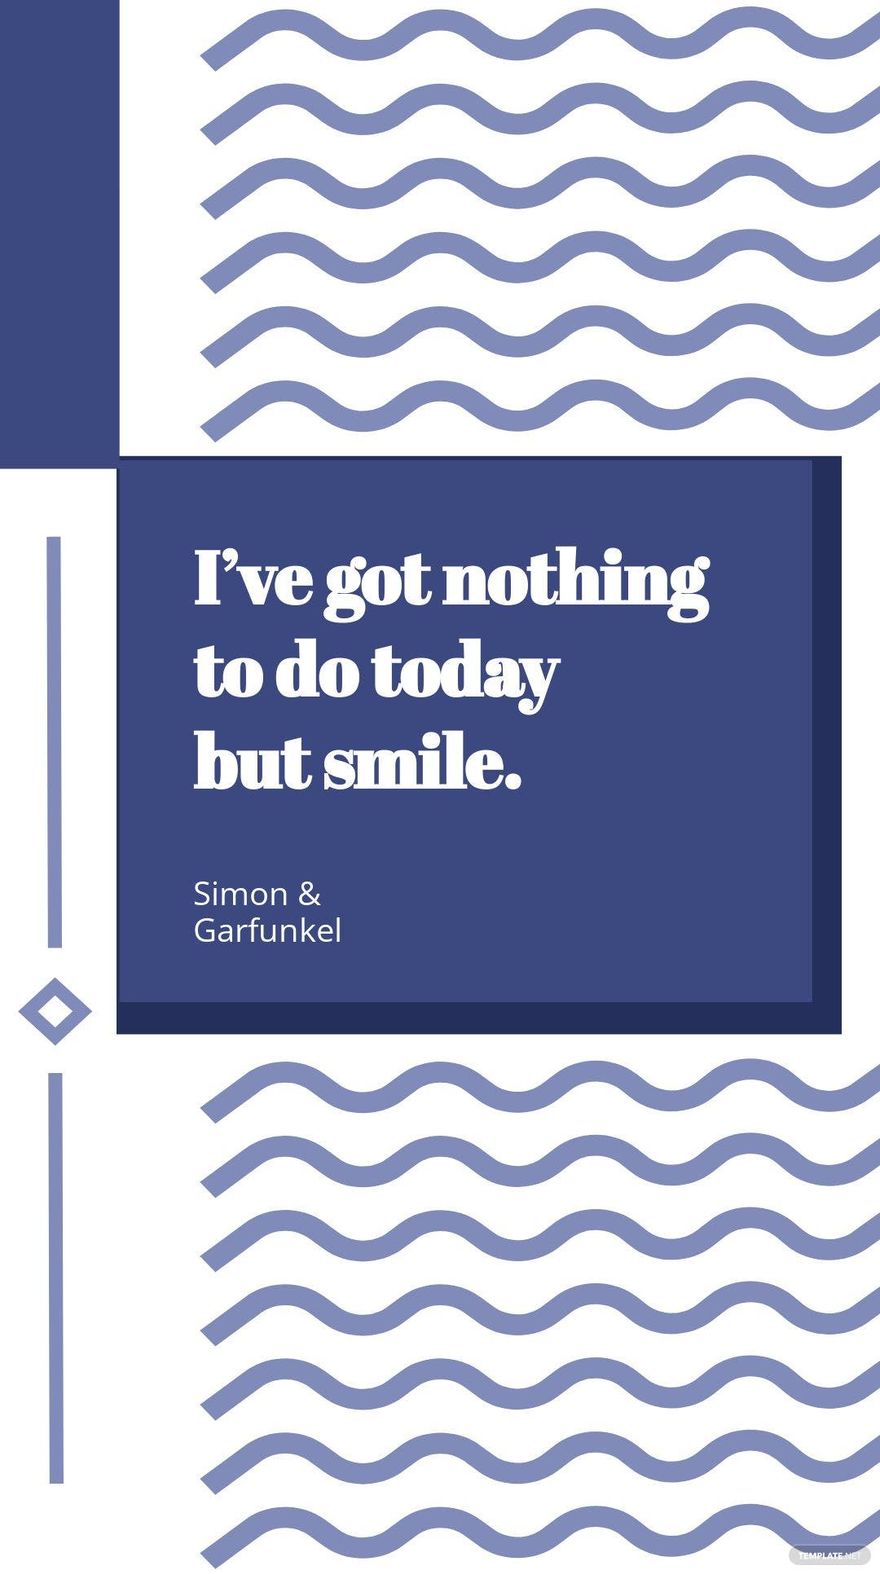 Simon & Garfunkel - I’ve got nothing to do today but smile.